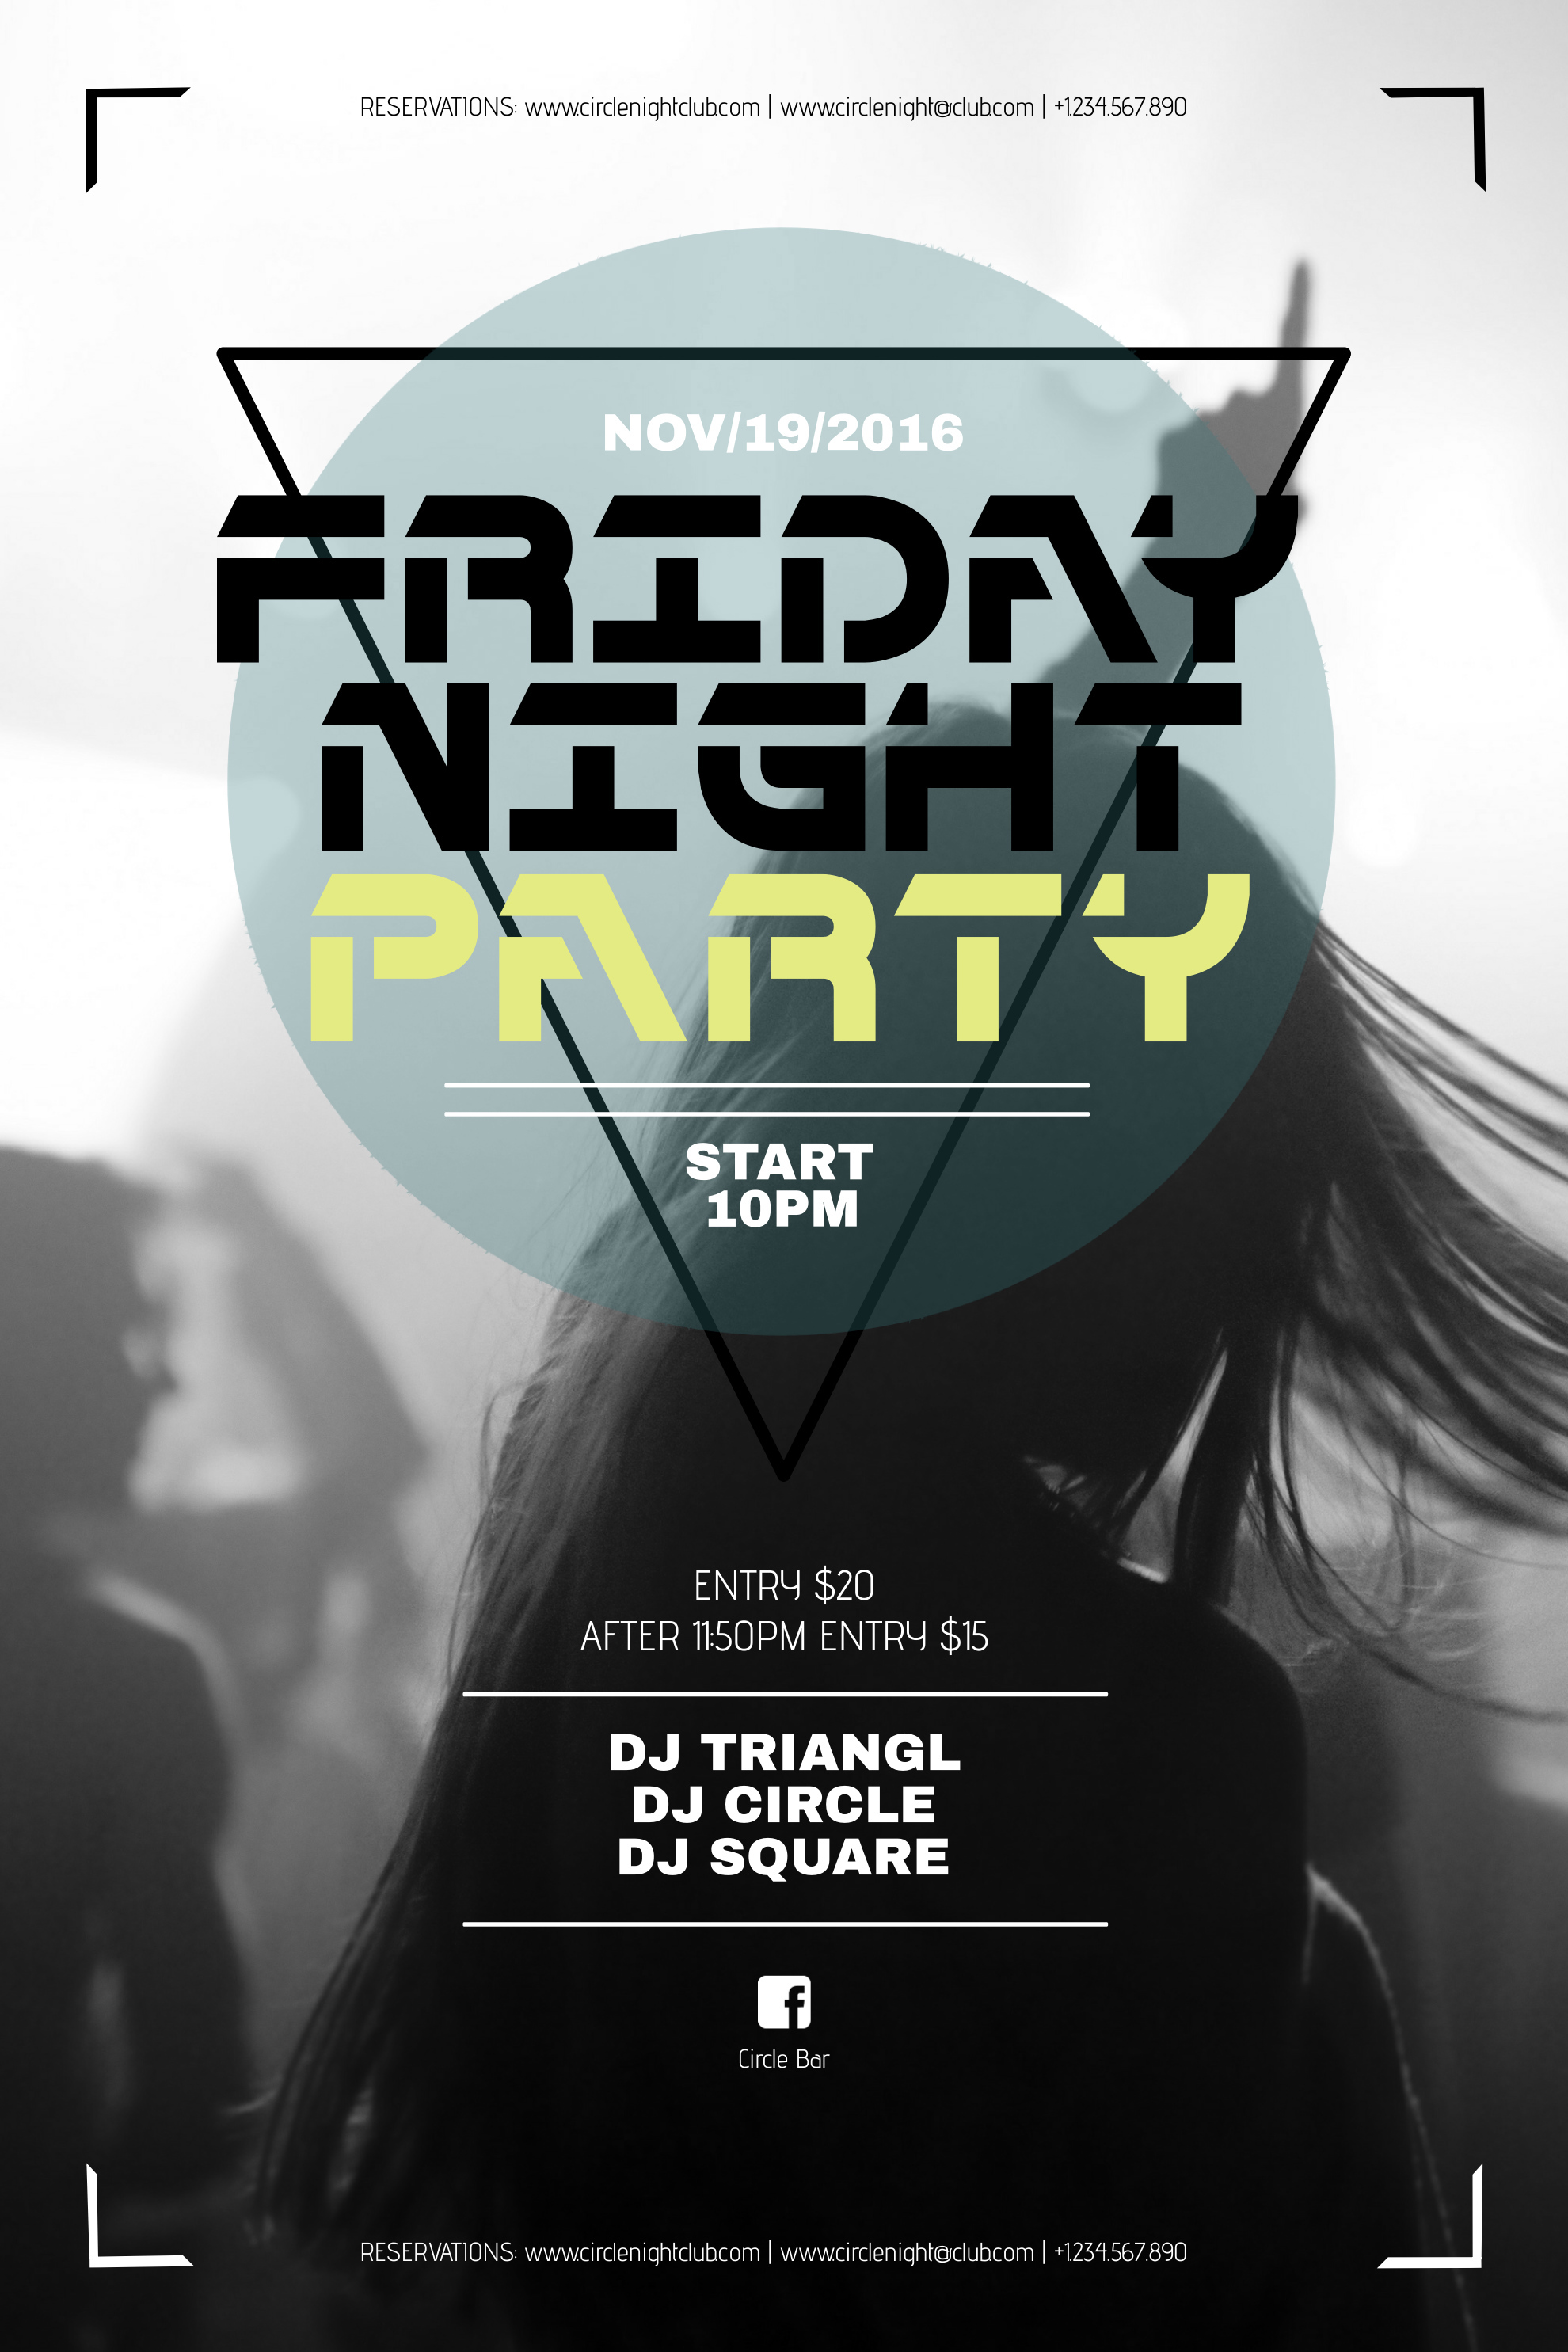 Friday Night Party Flyer B&W